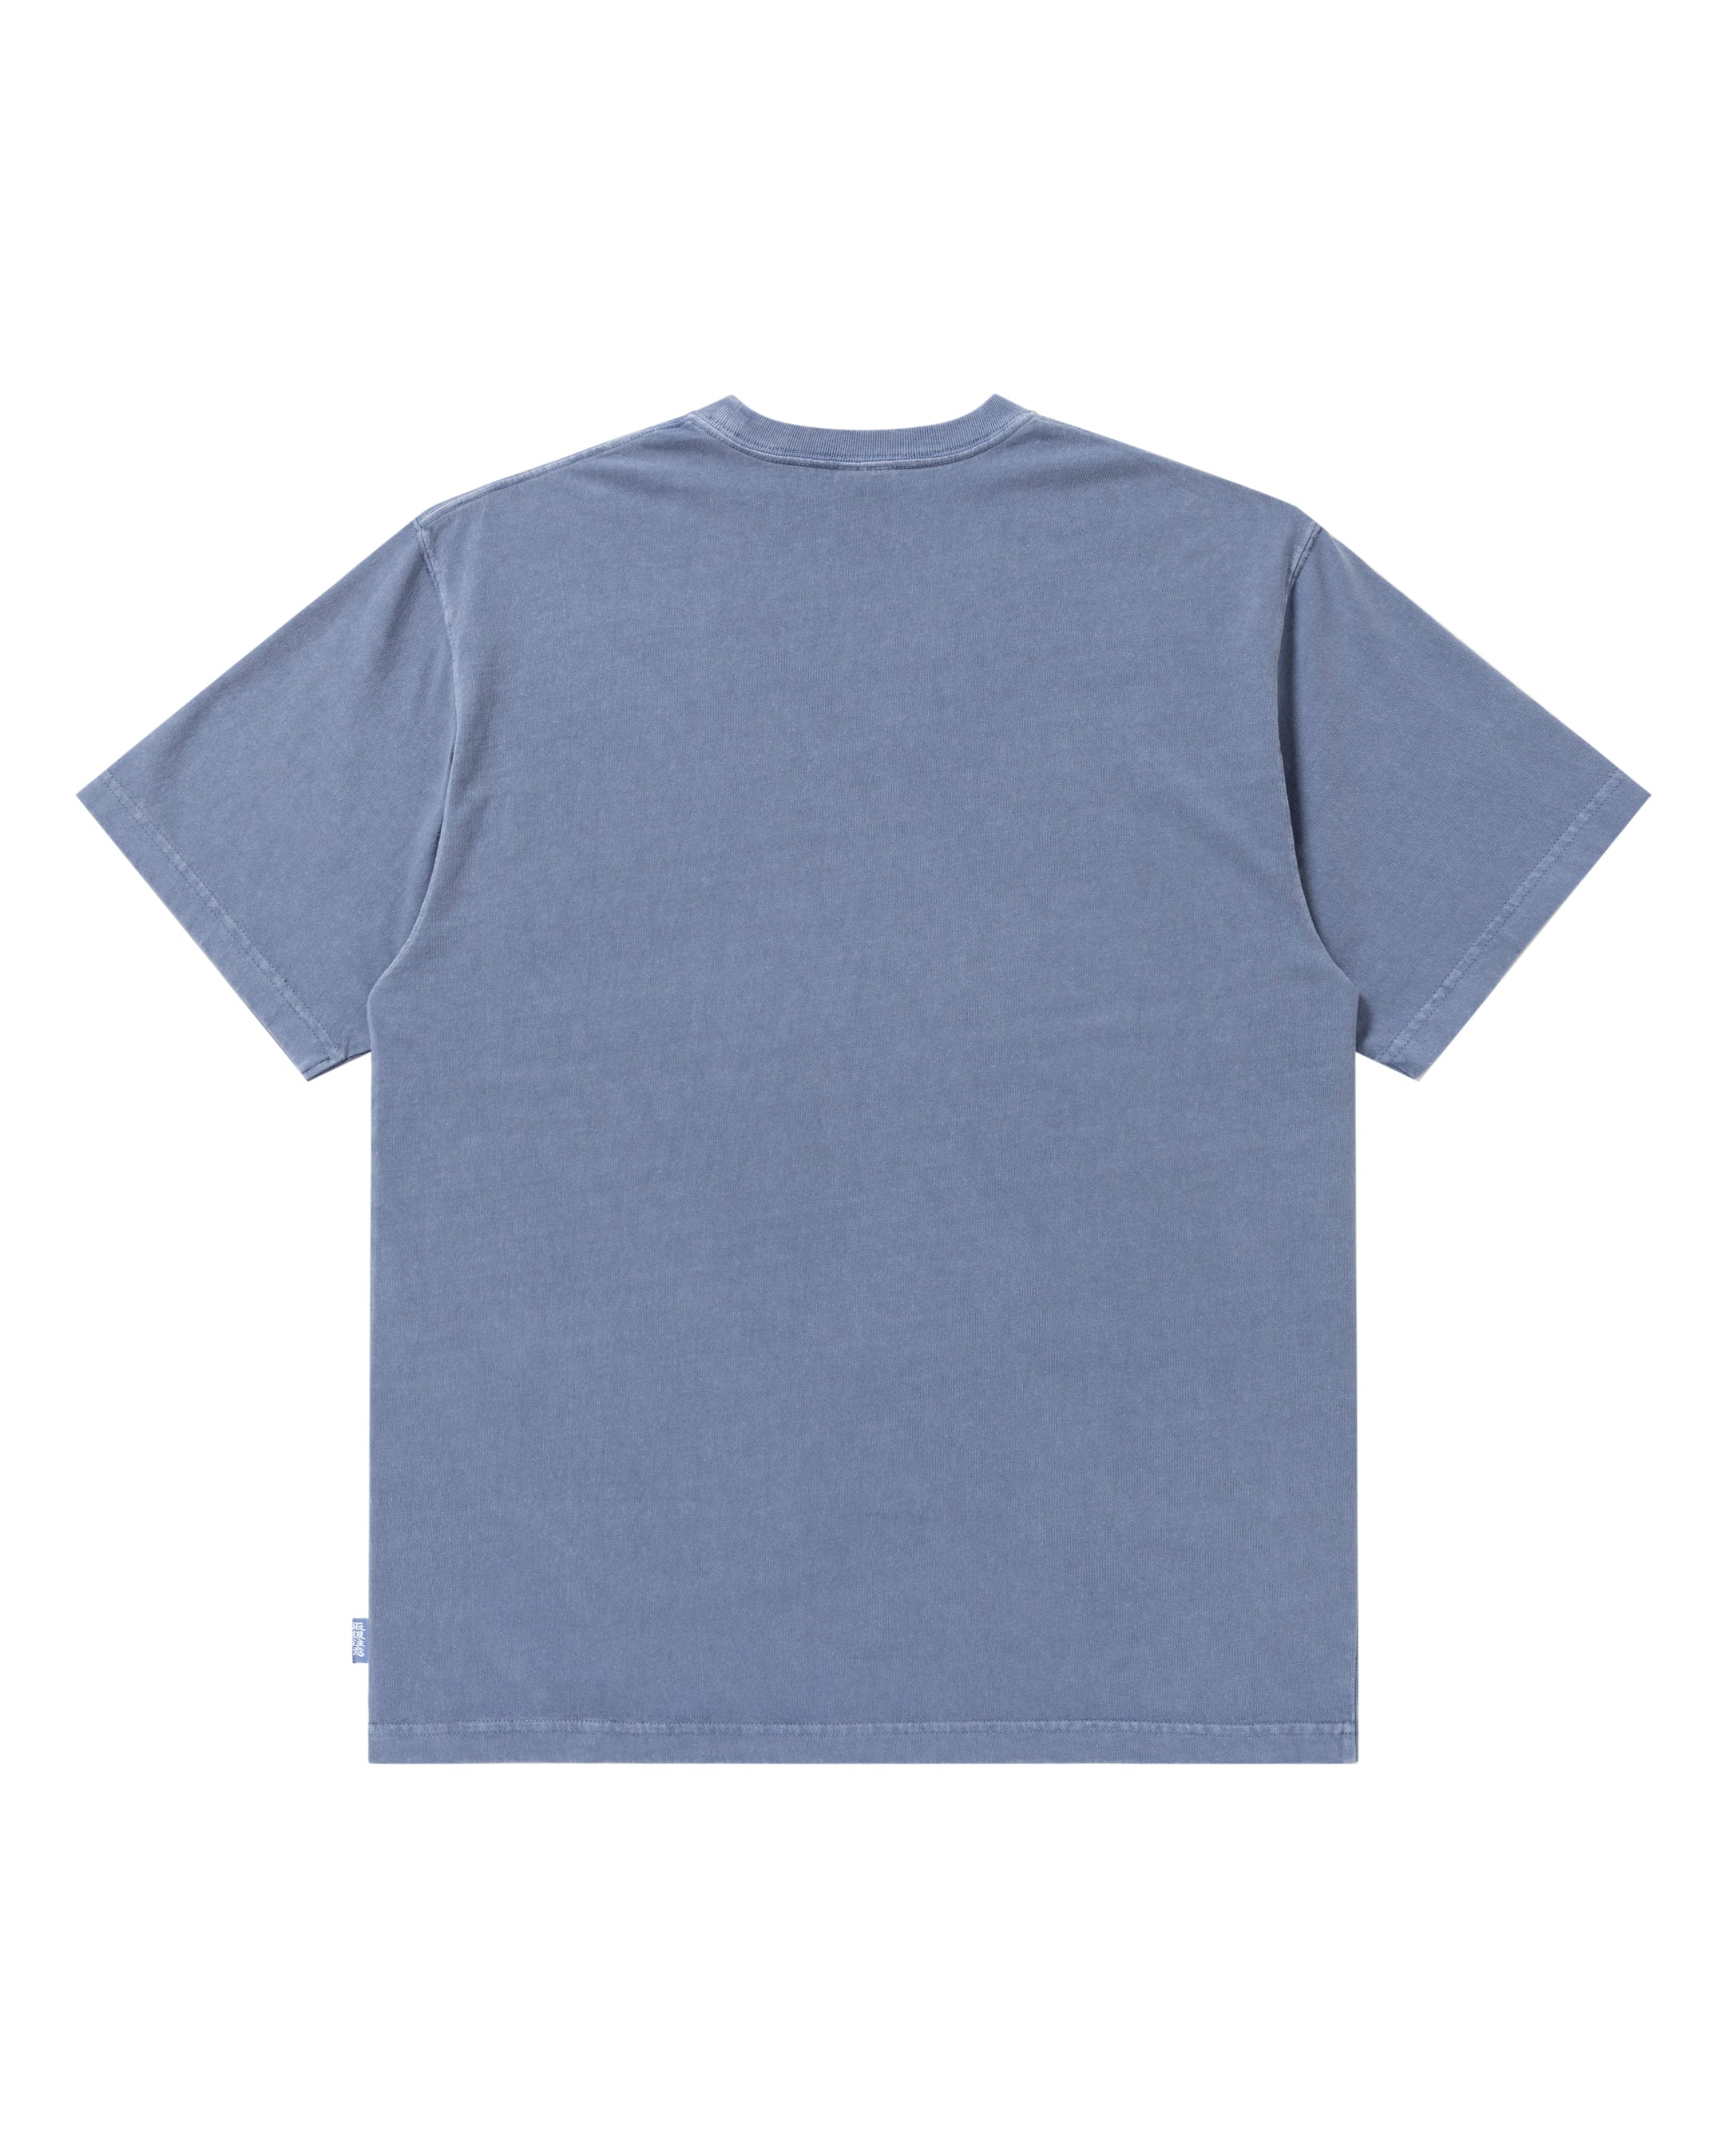 black eye patch OG LABEL TEE blue - Tシャツ/カットソー(半袖/袖なし)